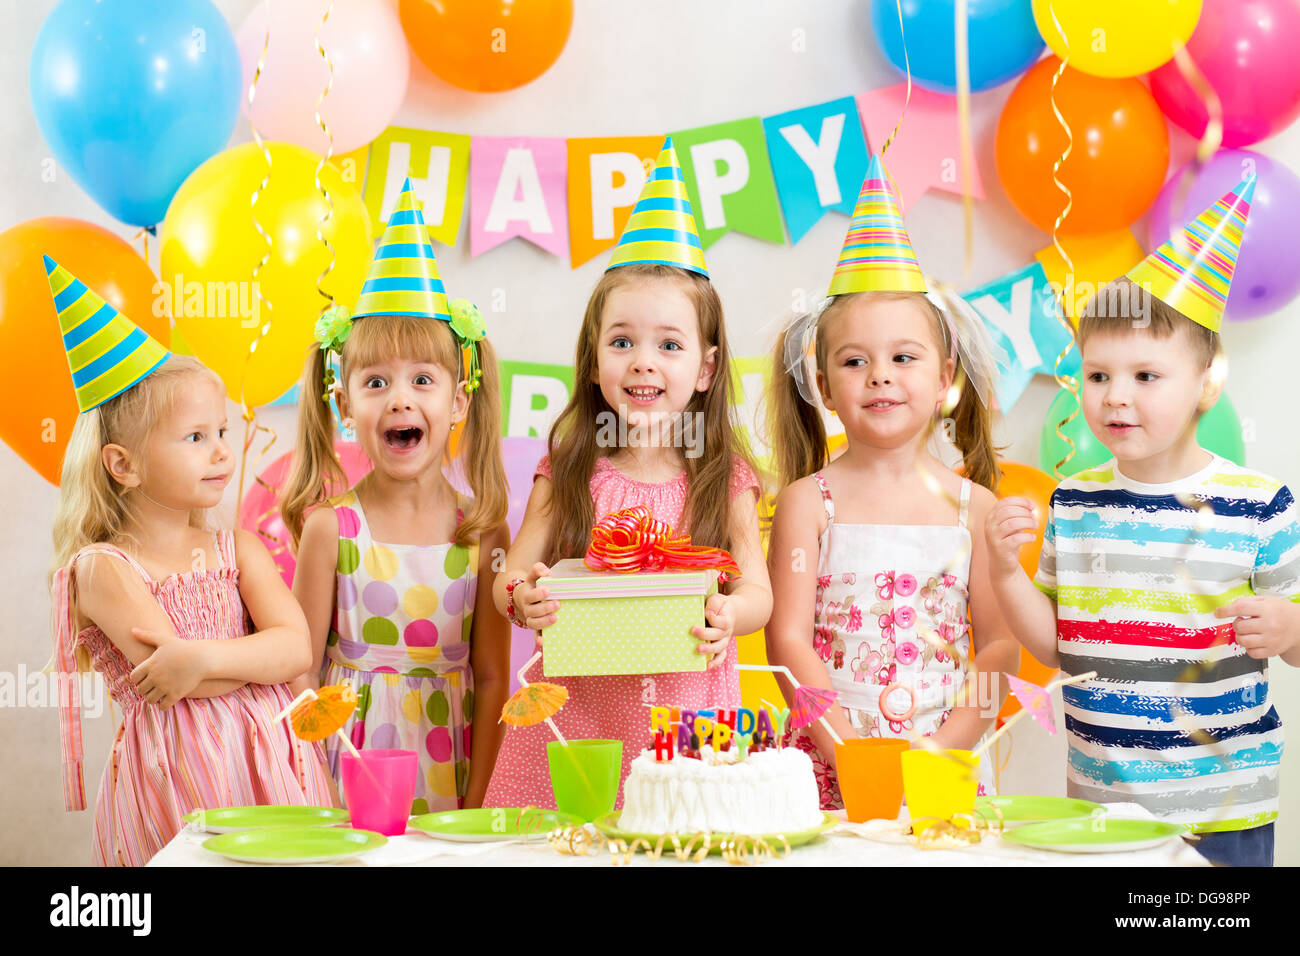 kids or children on birthday party Stock Photo